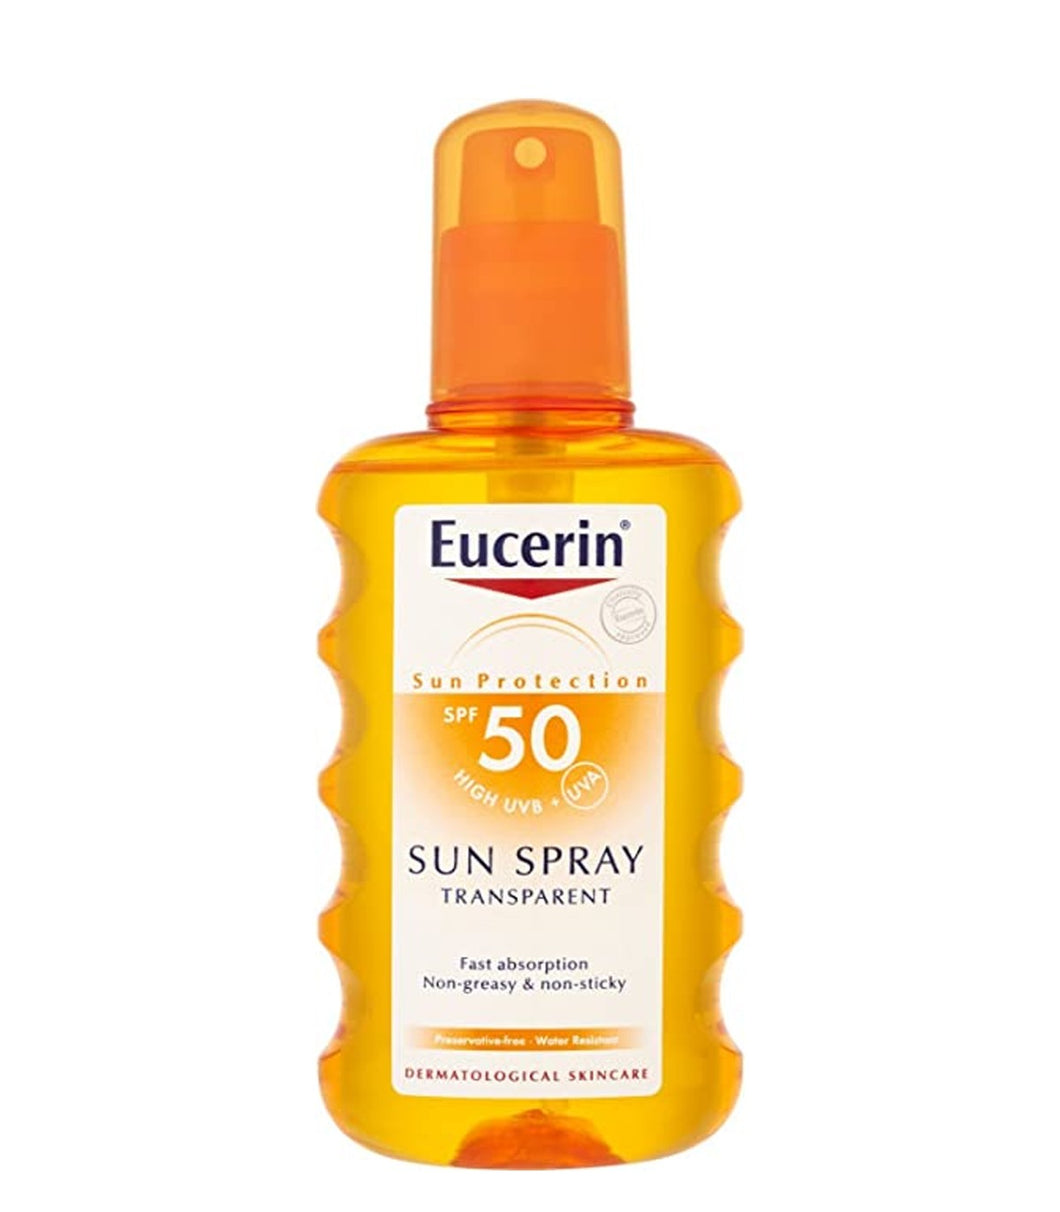 Eucerin OIL CONTROL SPF50 DRY TOUCH SUN SPRAY TRANSPARENT 200ml